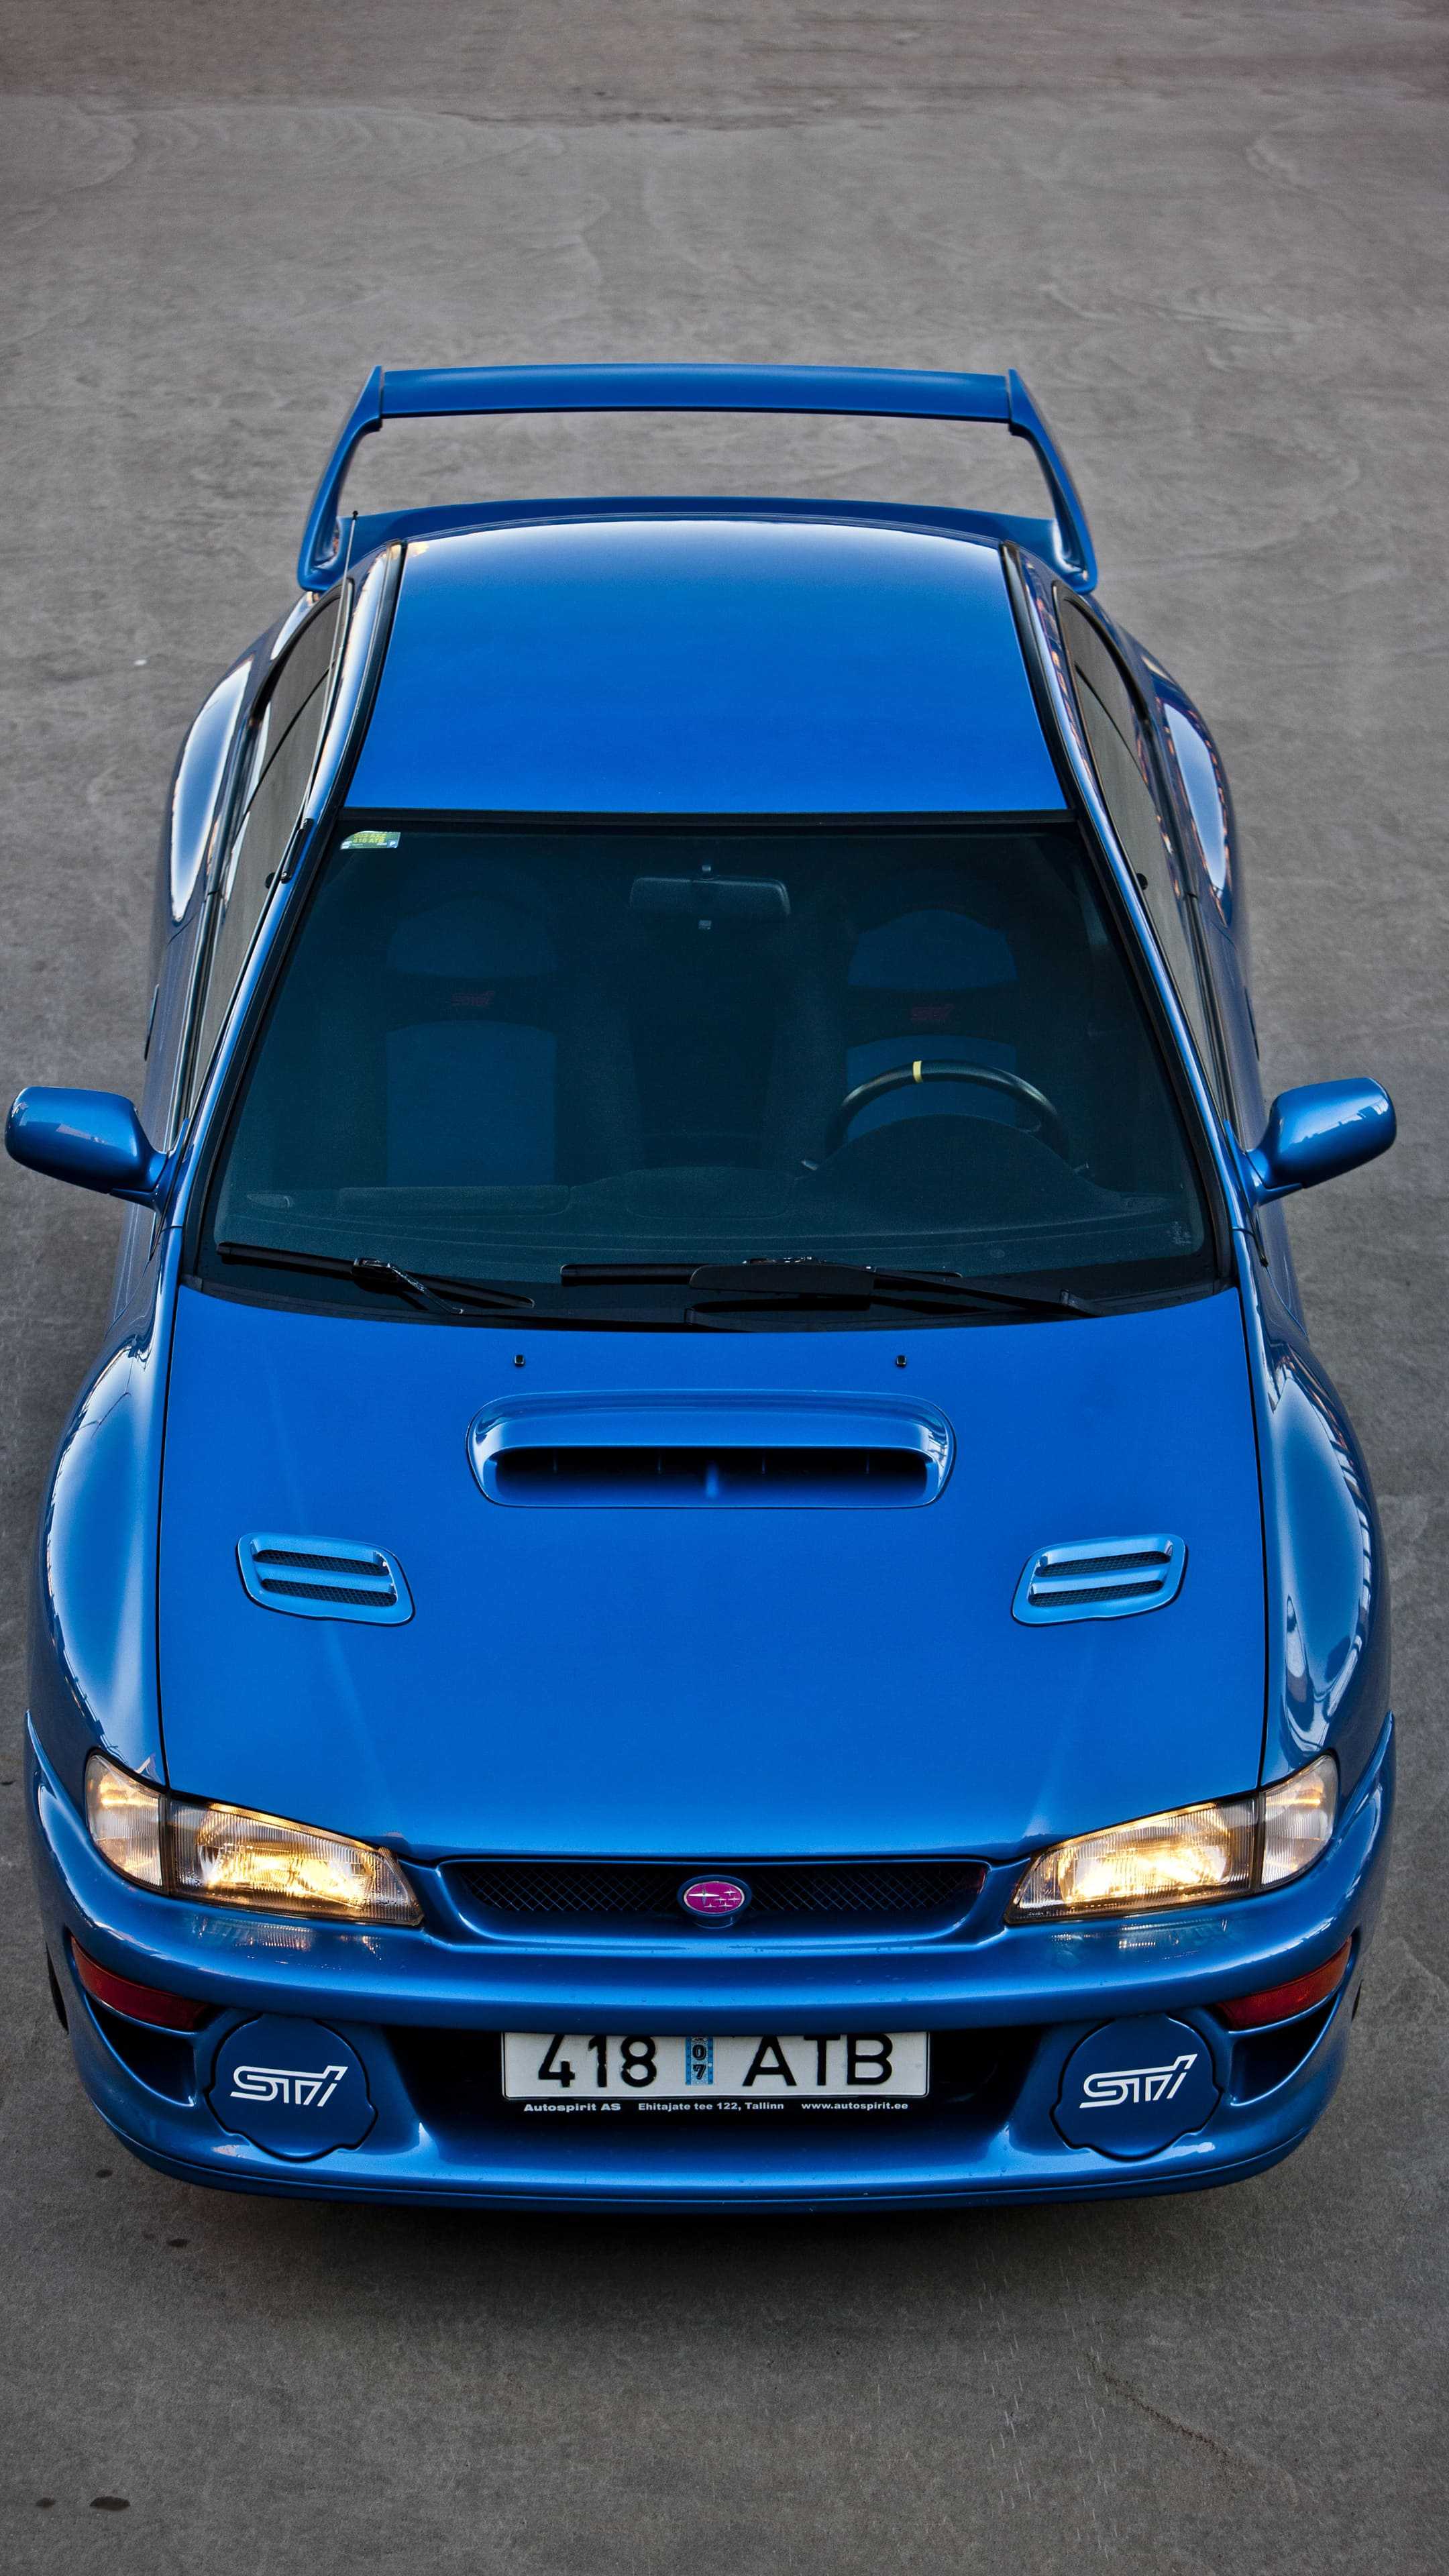 Subaru Wrx Wallpaper Ixpap